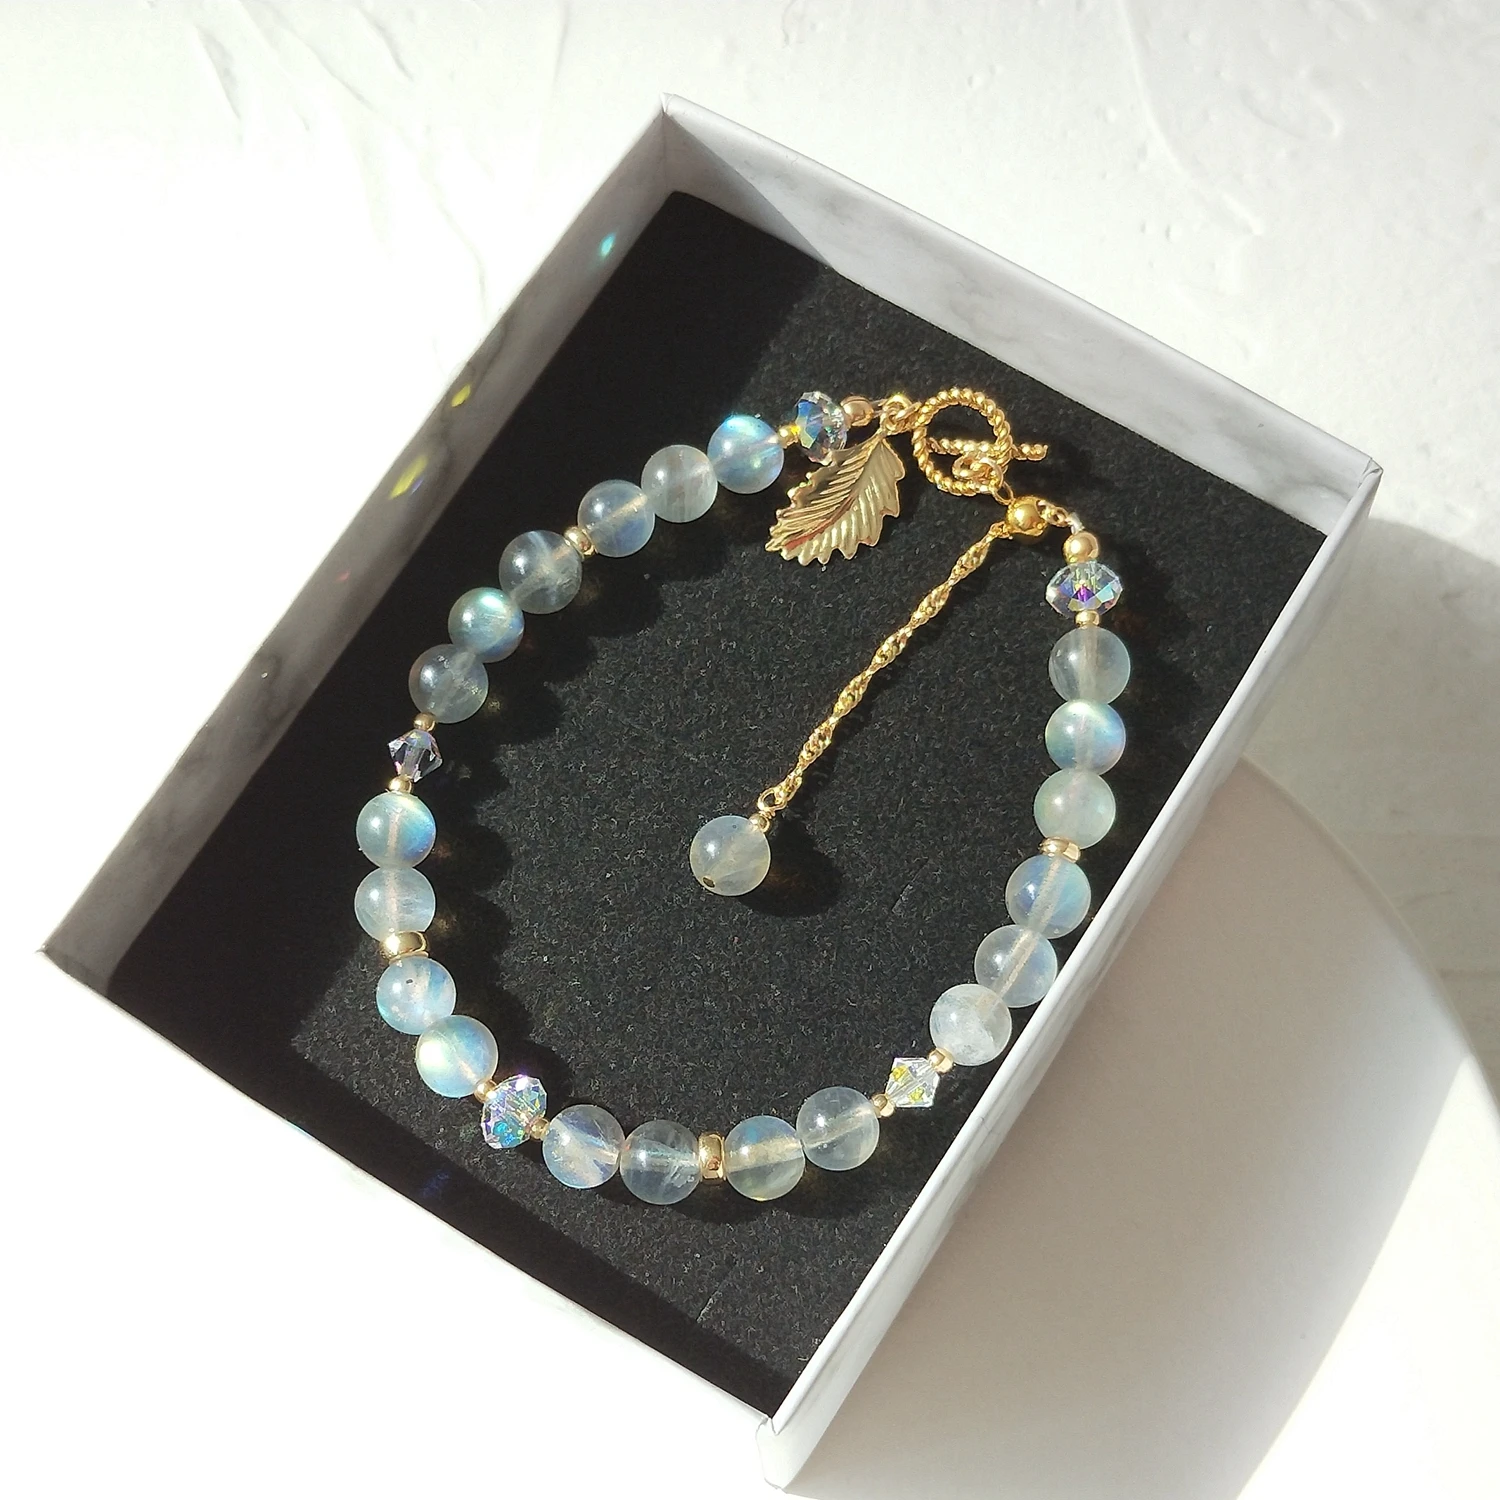 Lii Ji Labradorite Natural Stone 14K Gold Filled Charm Bracelet Gold Luxurious Fashion Jewelry For Women Girls Gift 2